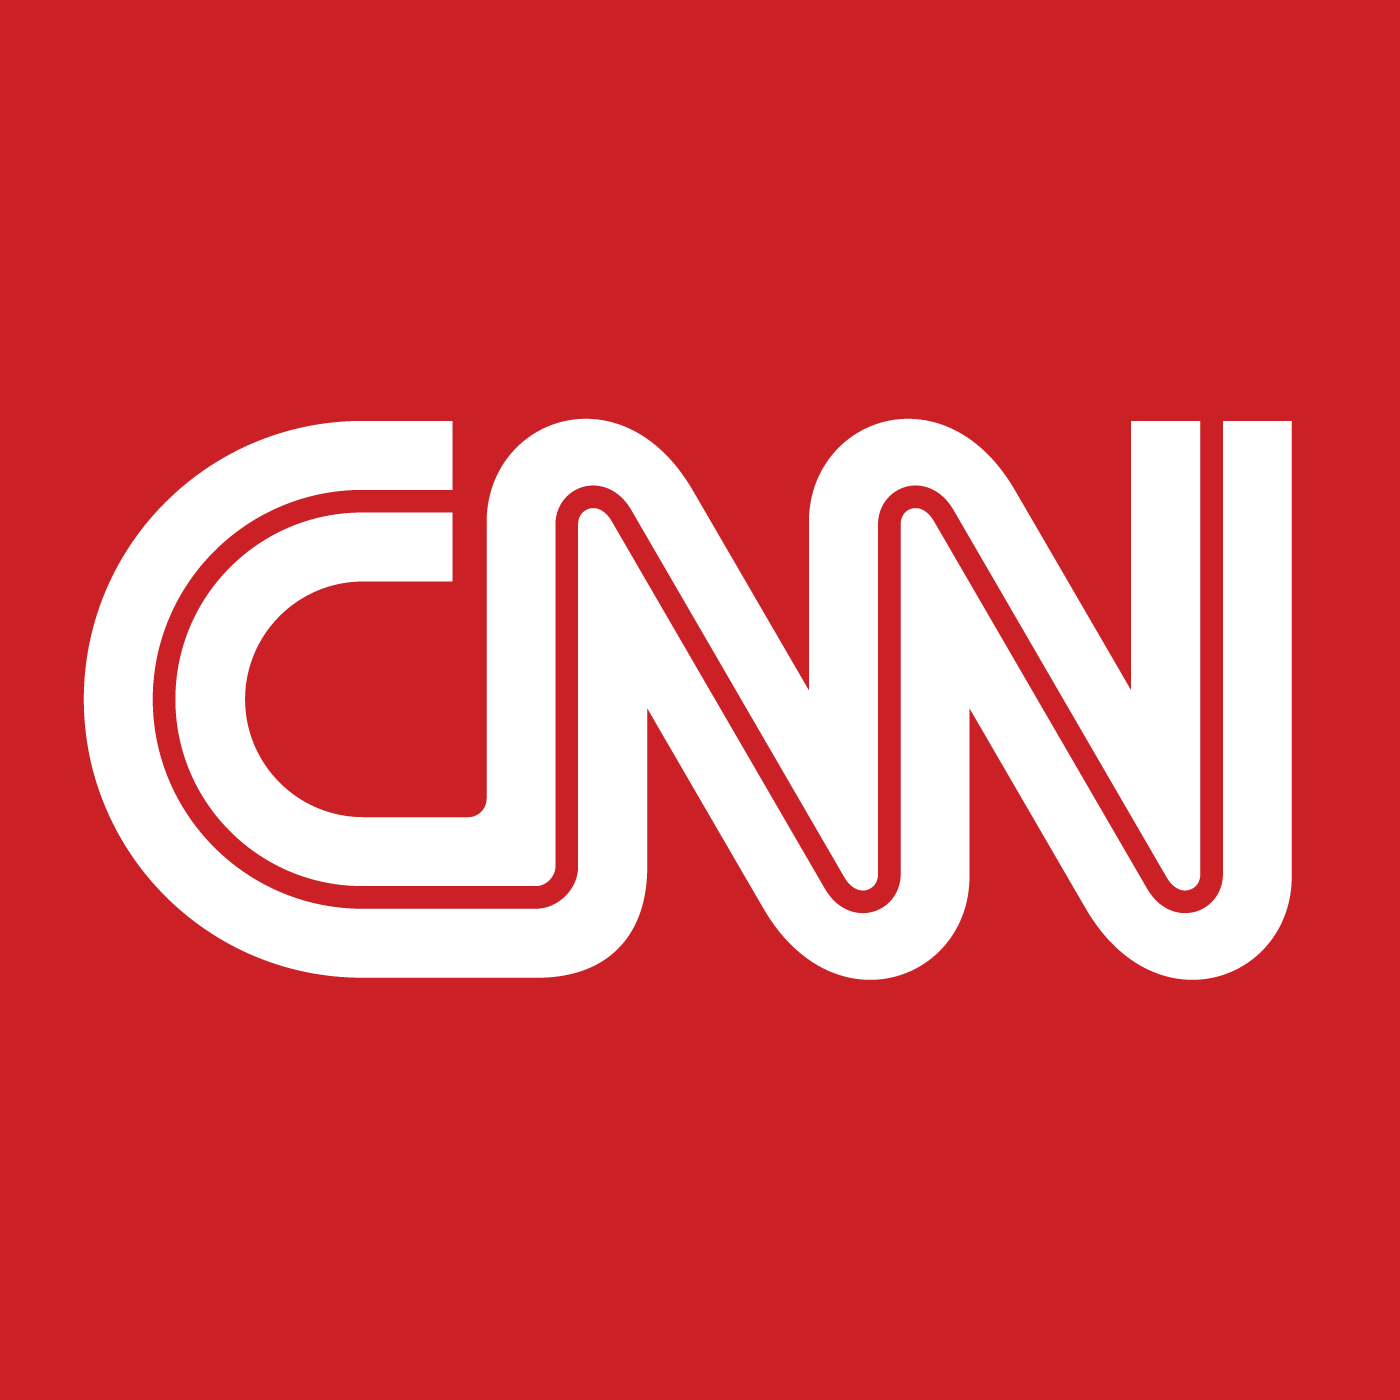 Clinton News Network (CNN logo) Blank Meme Template